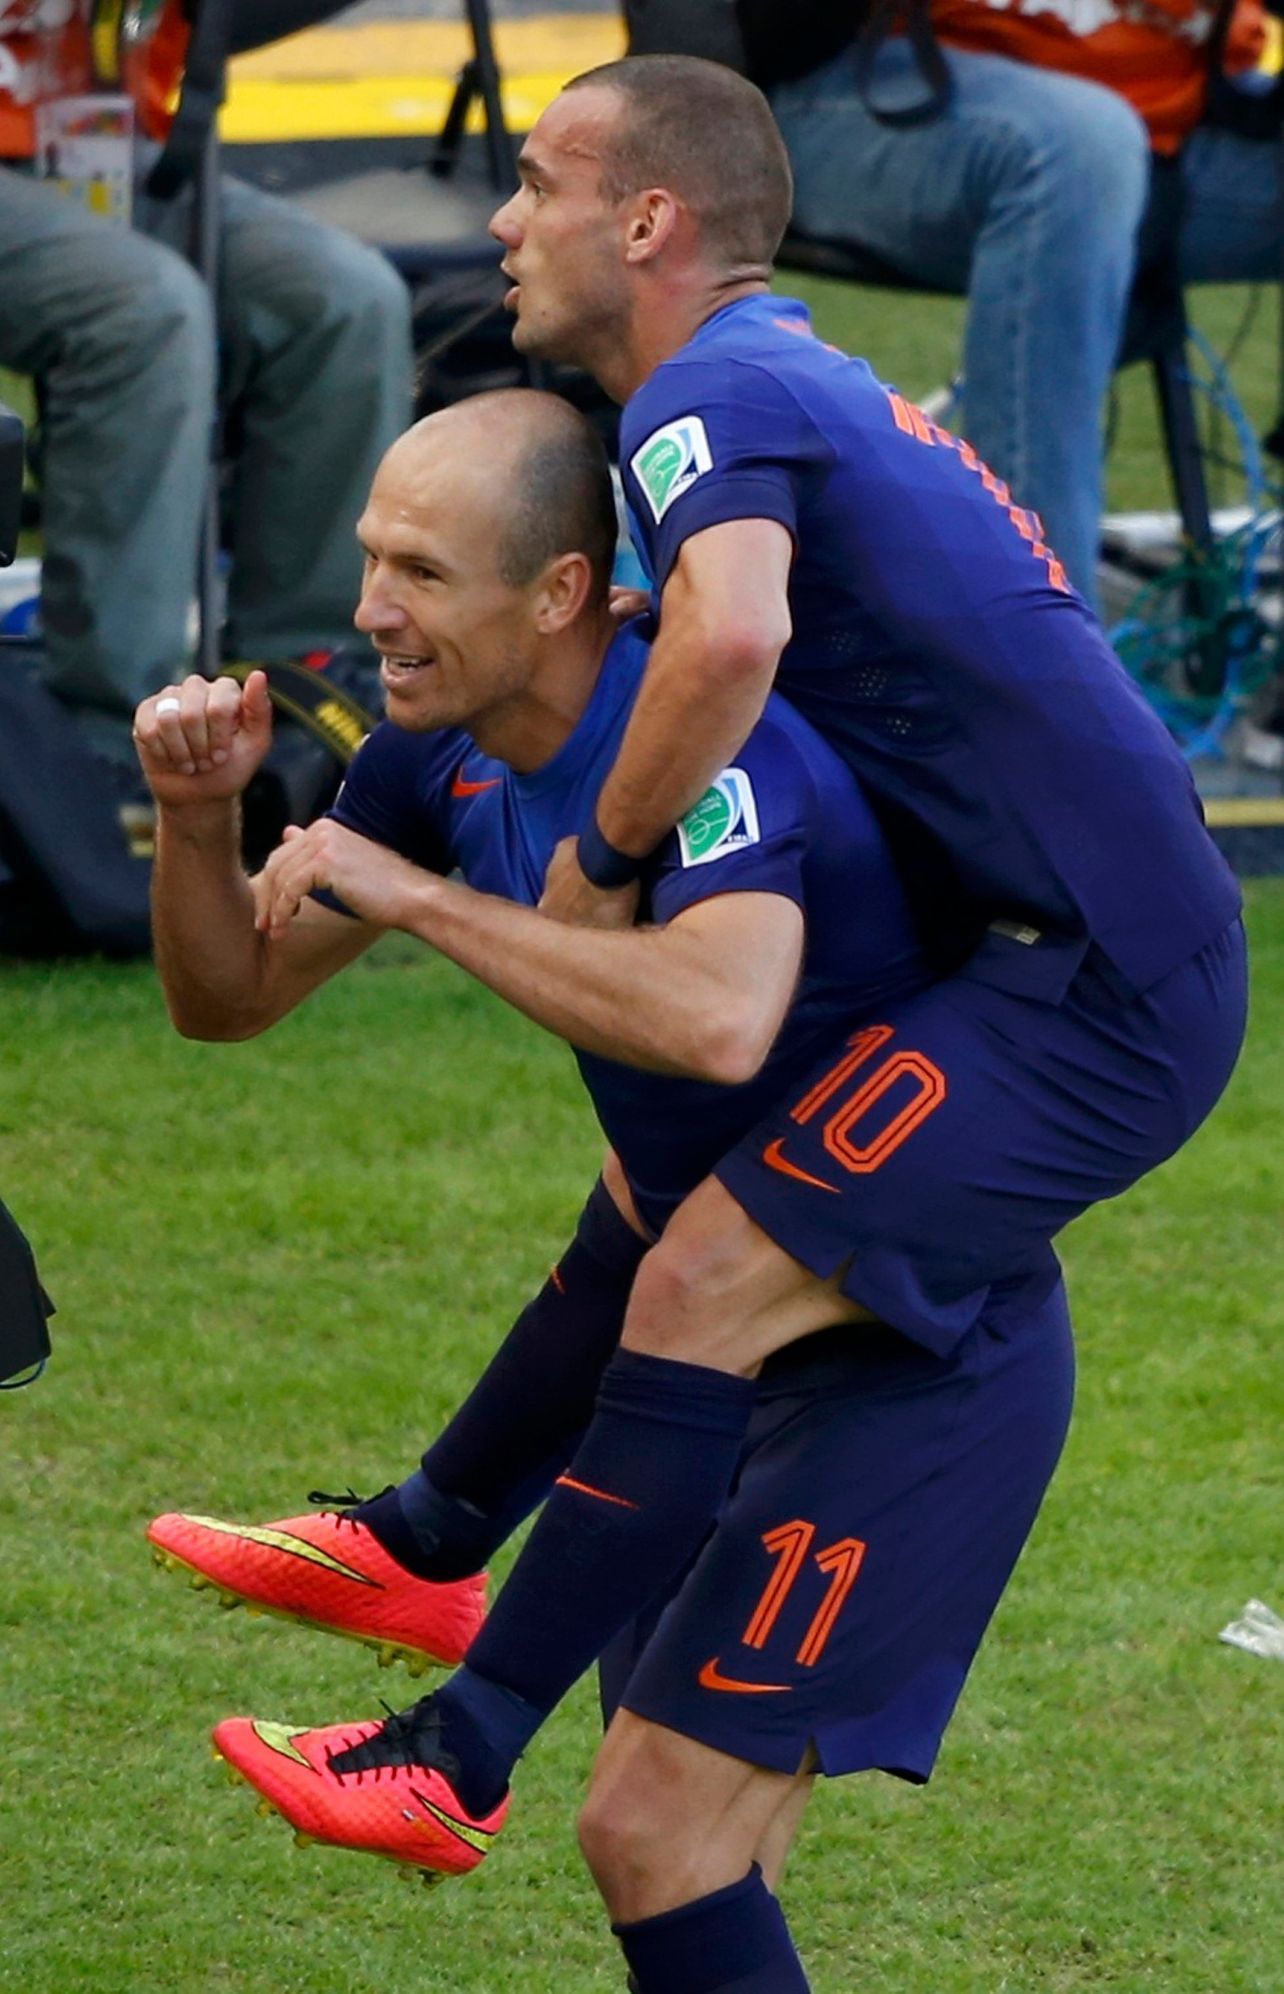 MS 2014, Nizozemsko-Austrálie: Arjen Robben a Wesley Sneijder